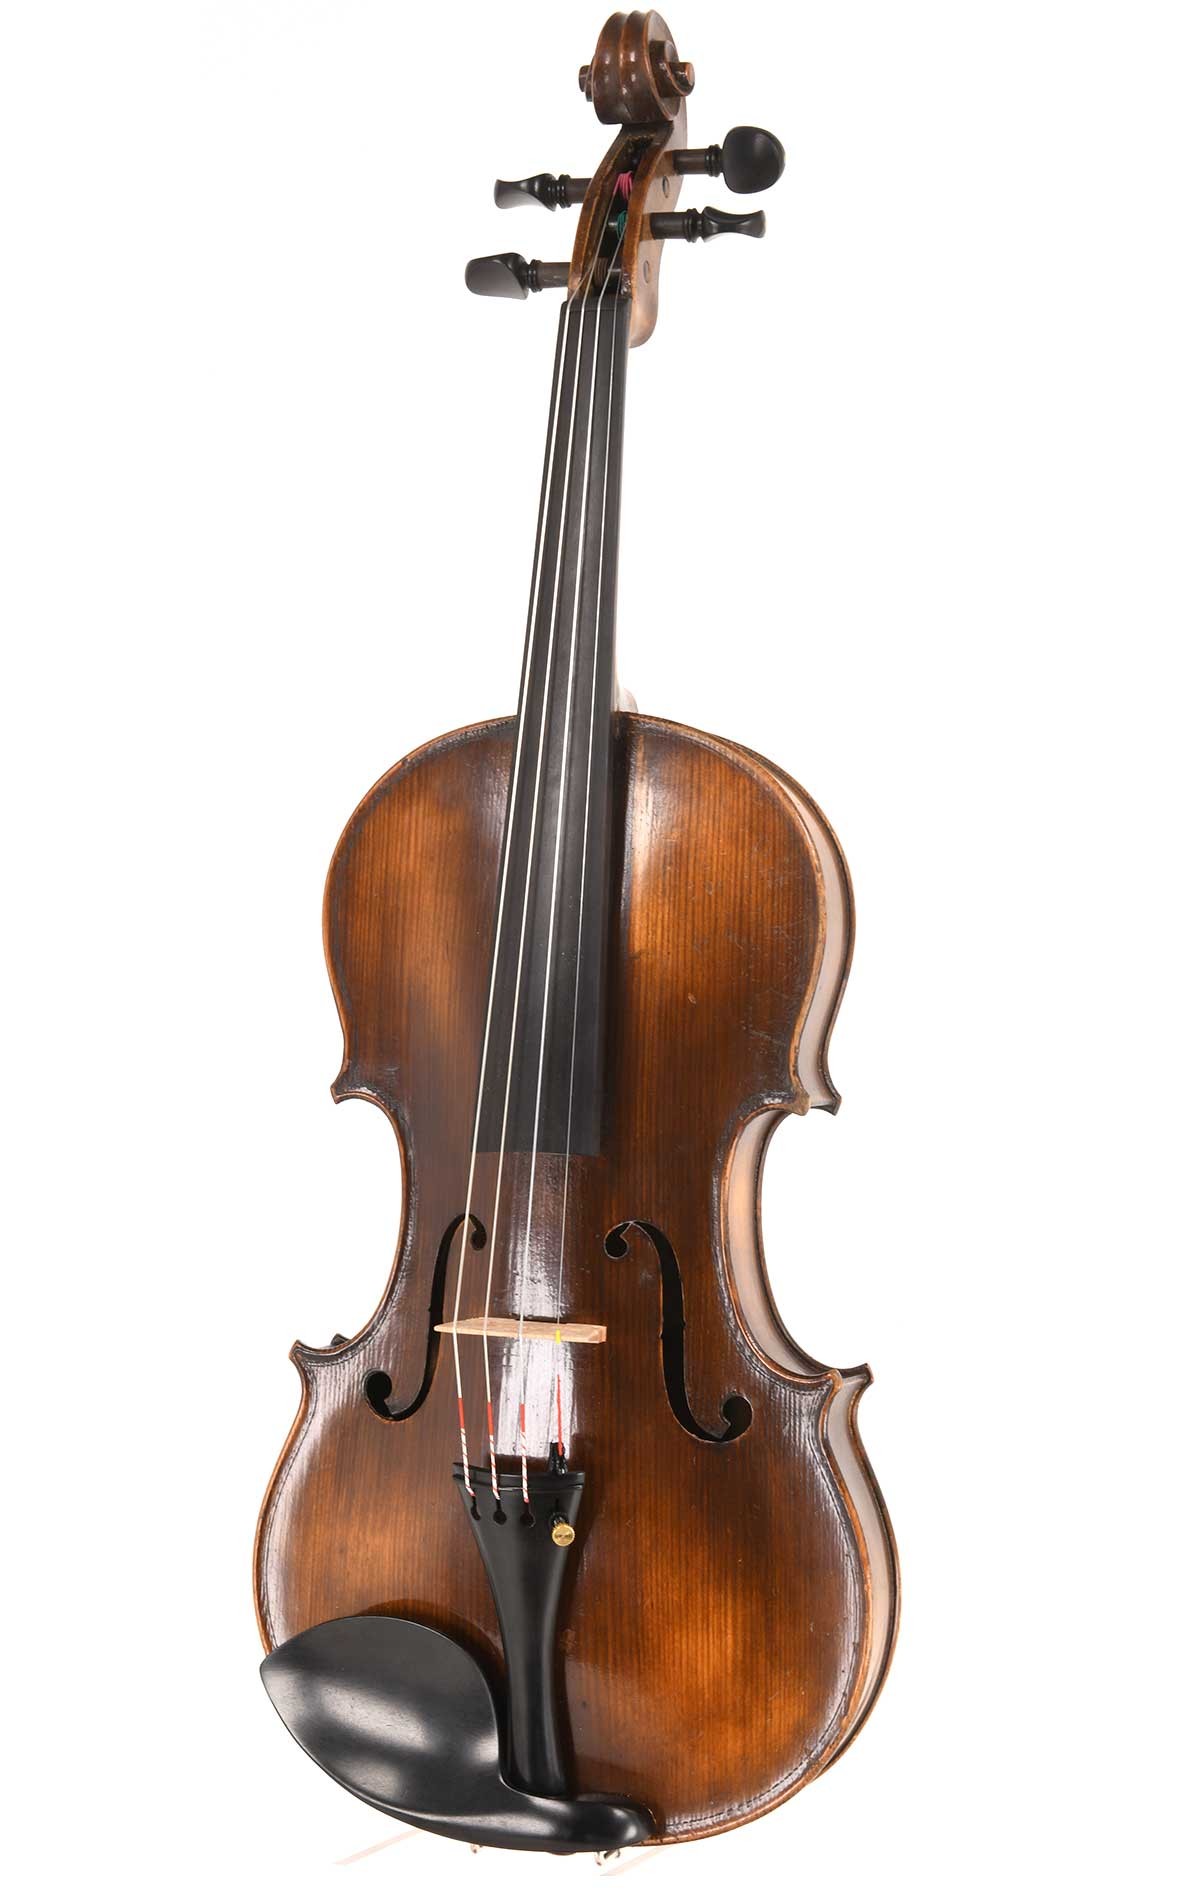 Old French violin c. 1910, after Antonio Stradivari